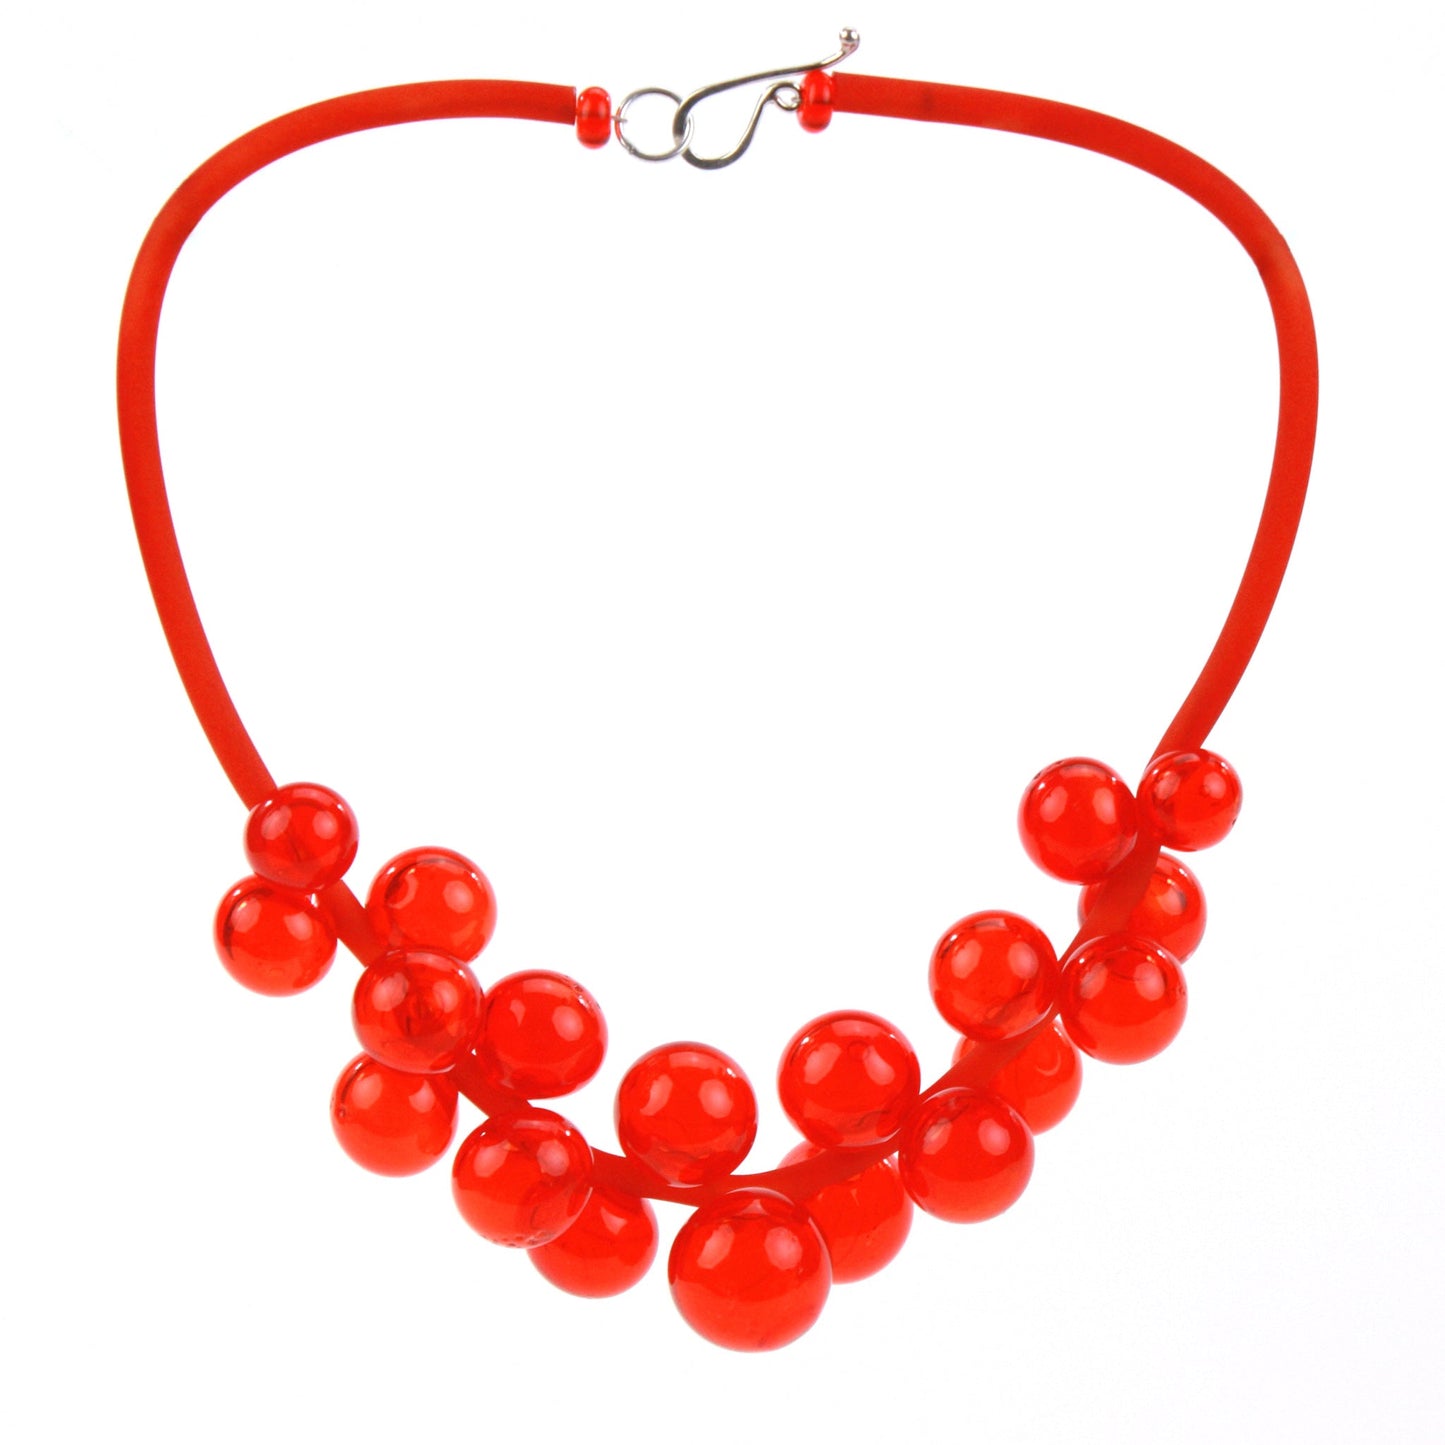 Chroma Bolla Necklace in Orange Red